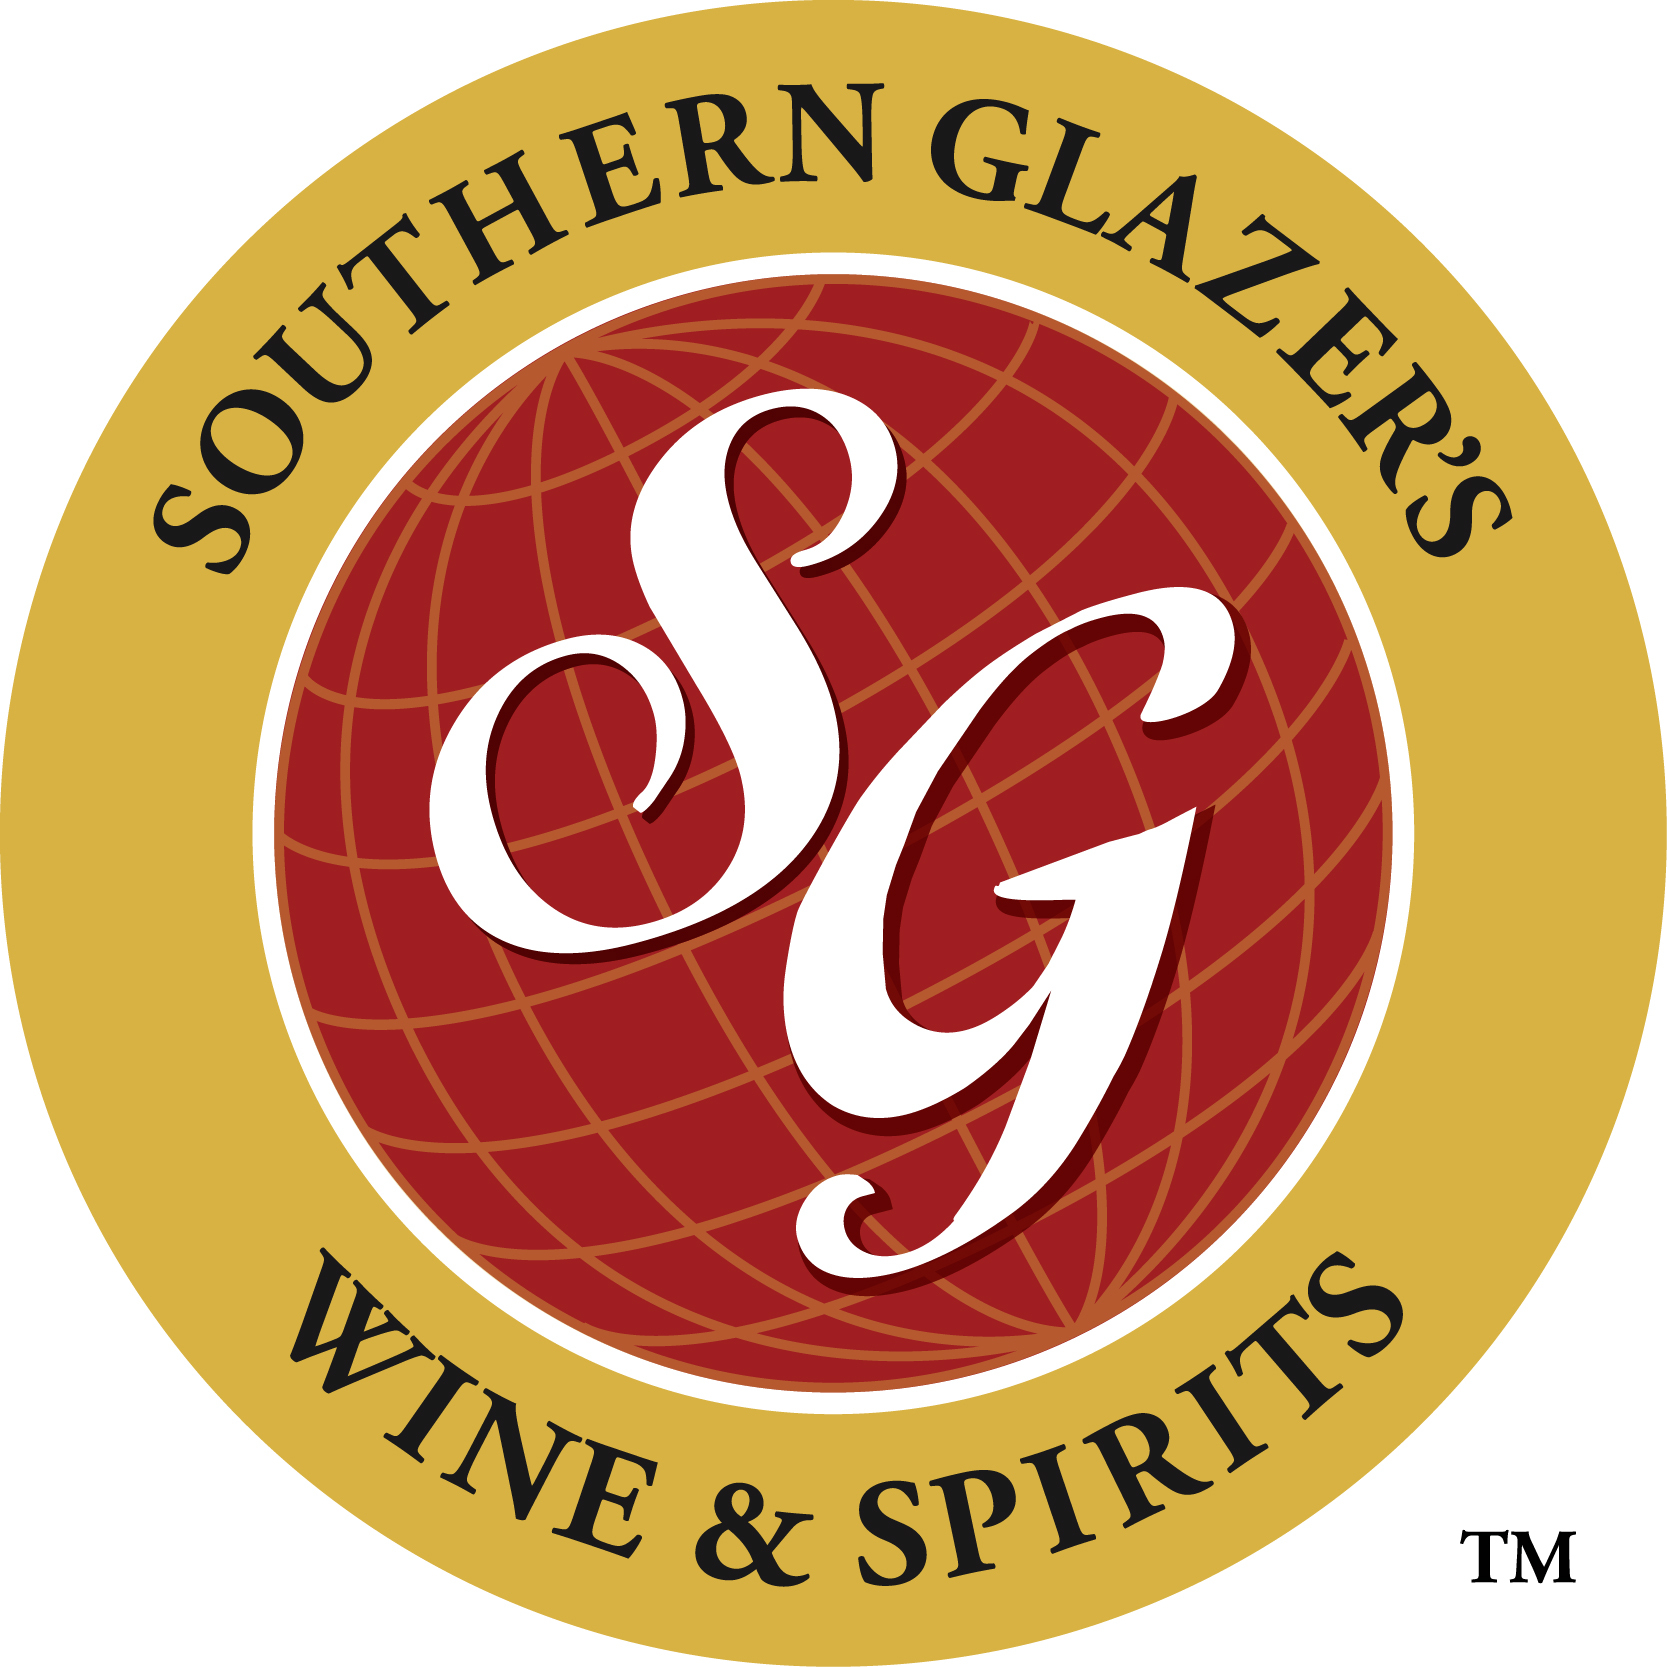 Southern Glazer Wine and Spirits